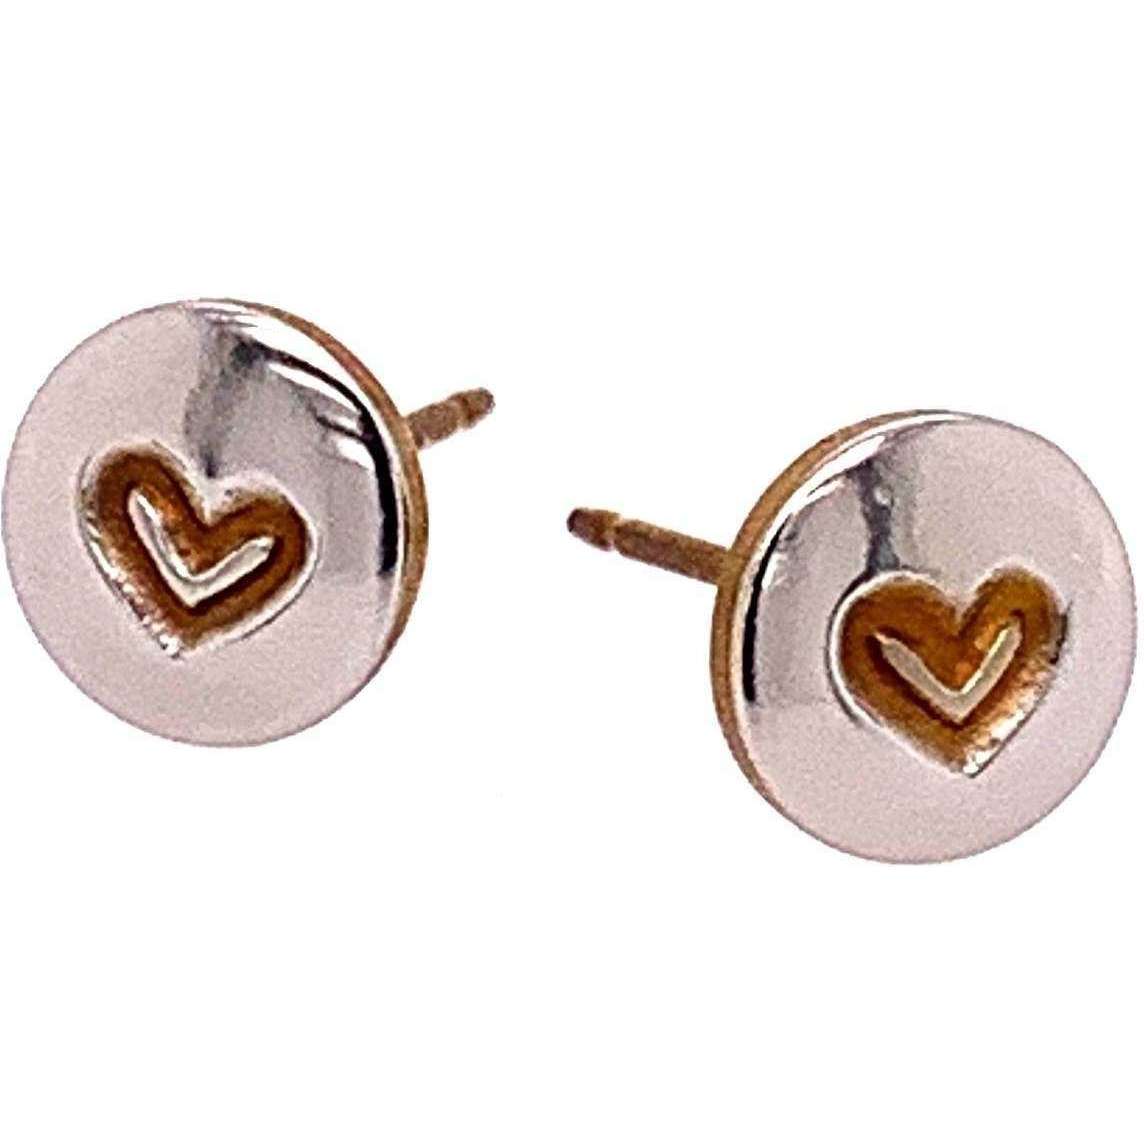 Ti2 Titanium Heart Stud Earrings - Brown